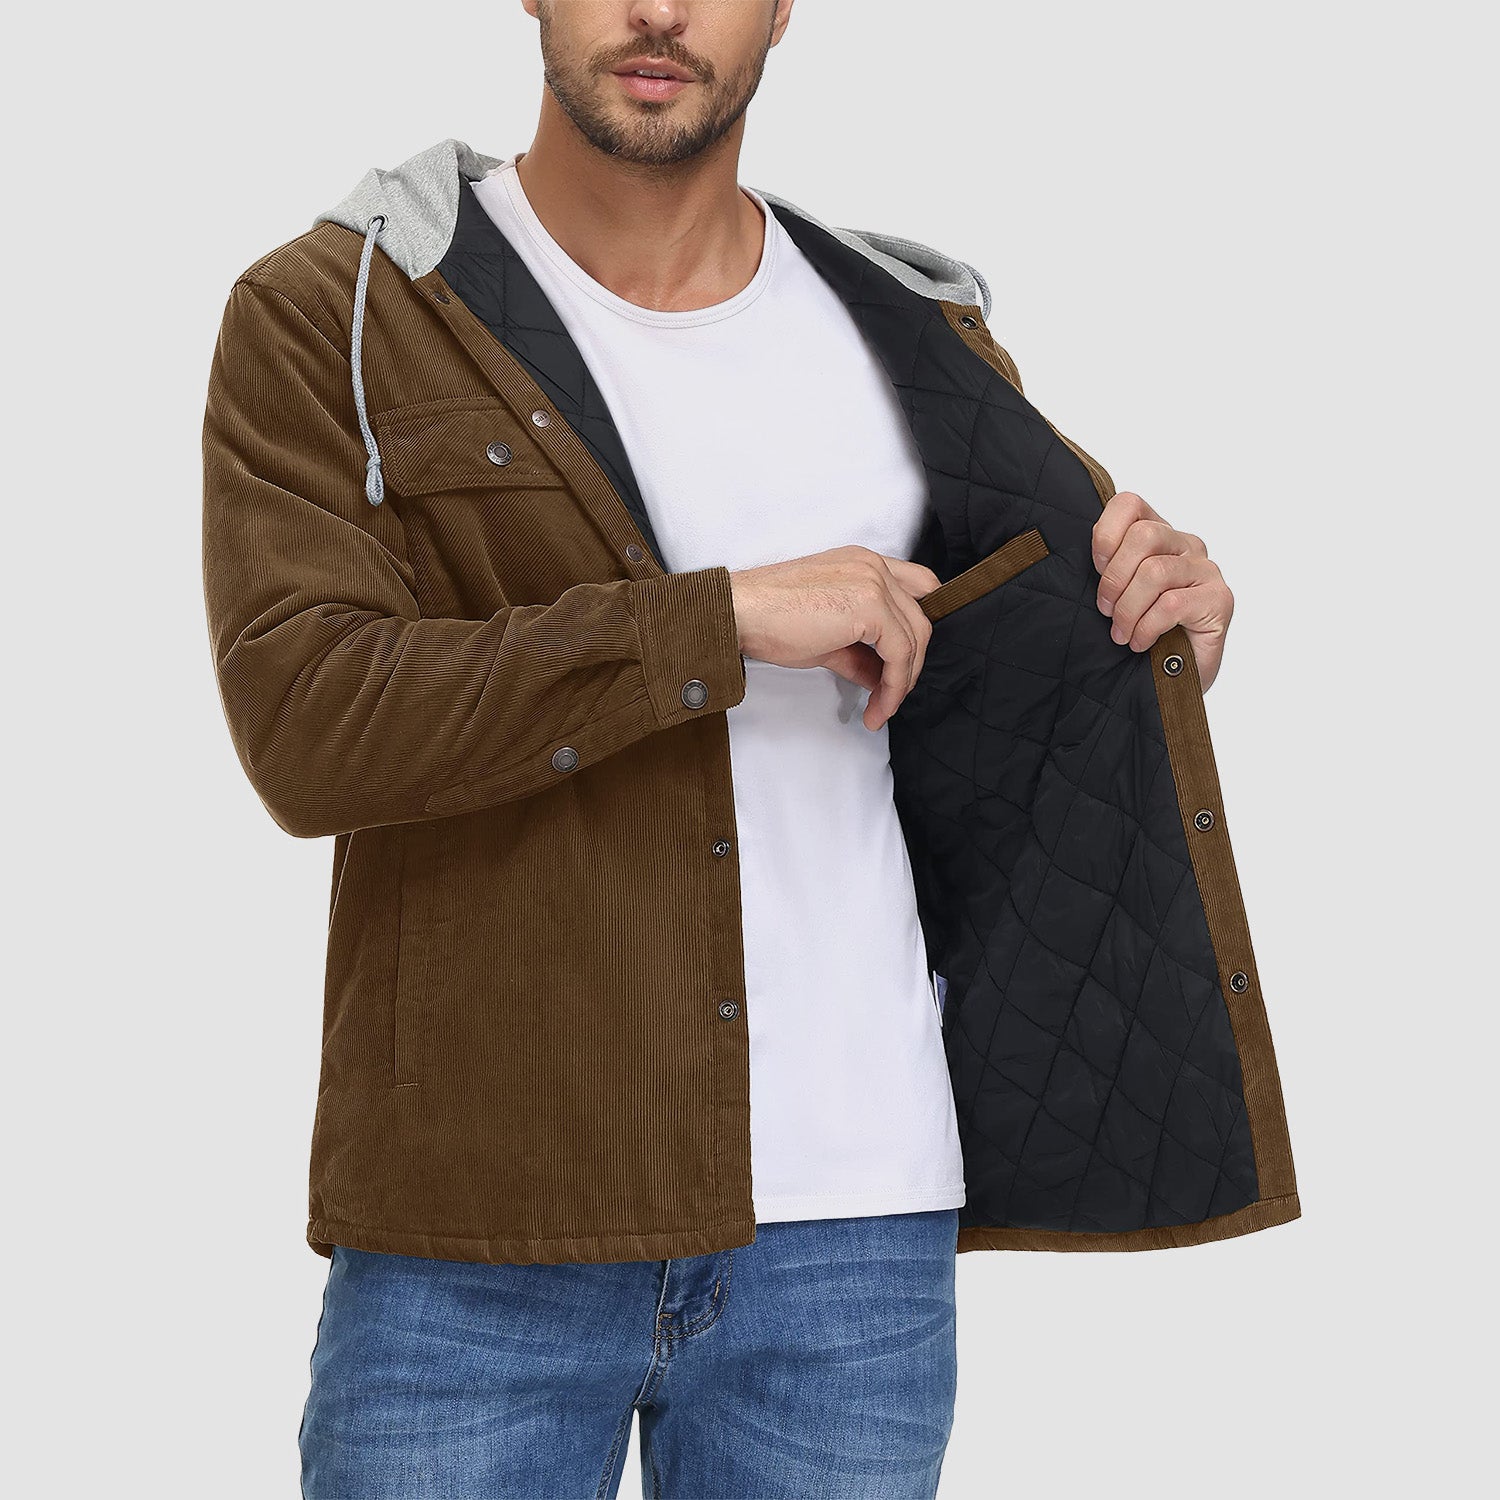 Men's Corduroy Jacket Hoodies Quilted Lined Winter Jacket